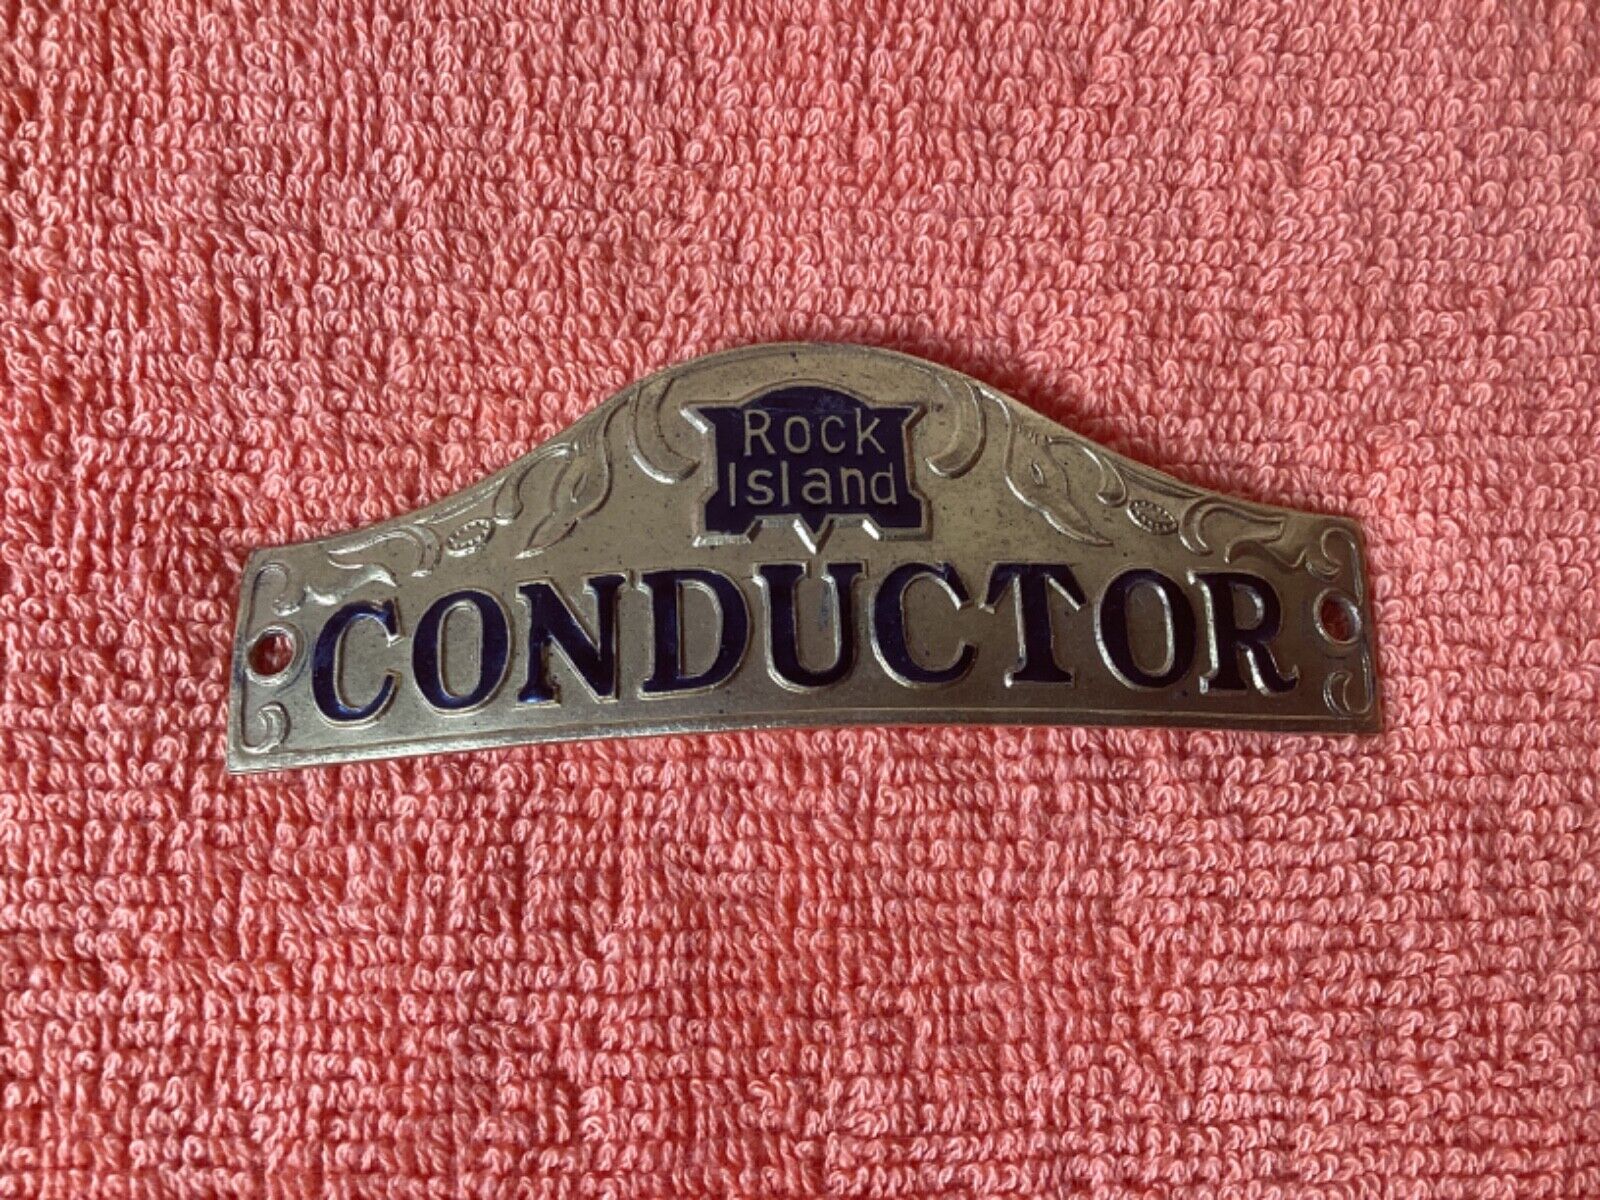 Vintage ROCK ISLAND CONDUCTOR Railroad Hat Badge Railway Uniform Tag Train Old